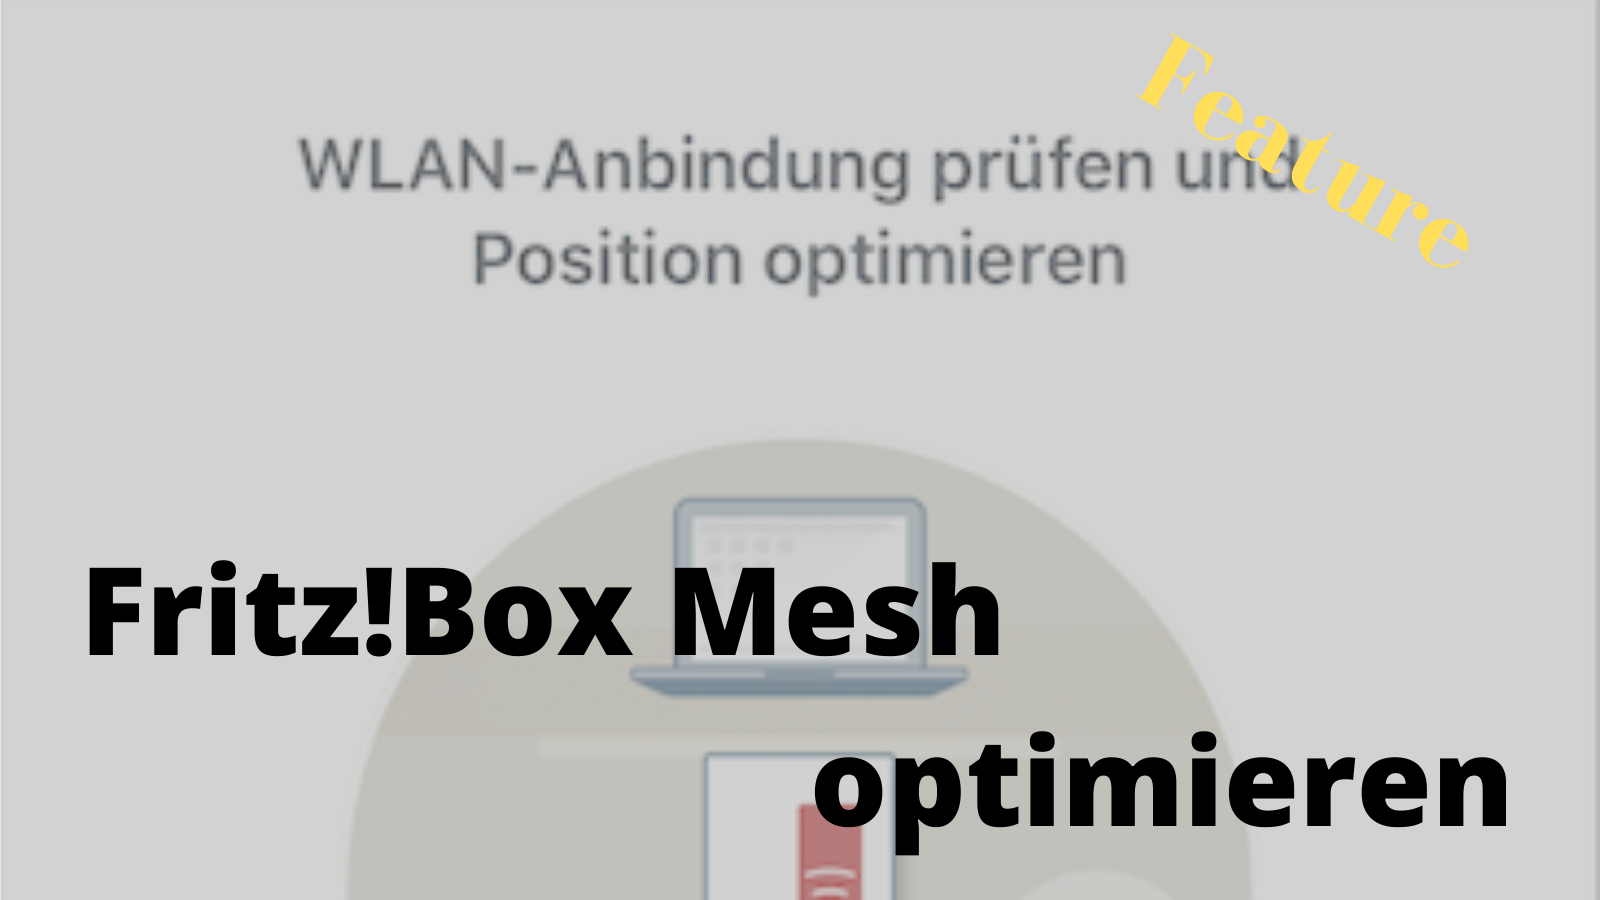 Fritz!Box Mesh optimieren